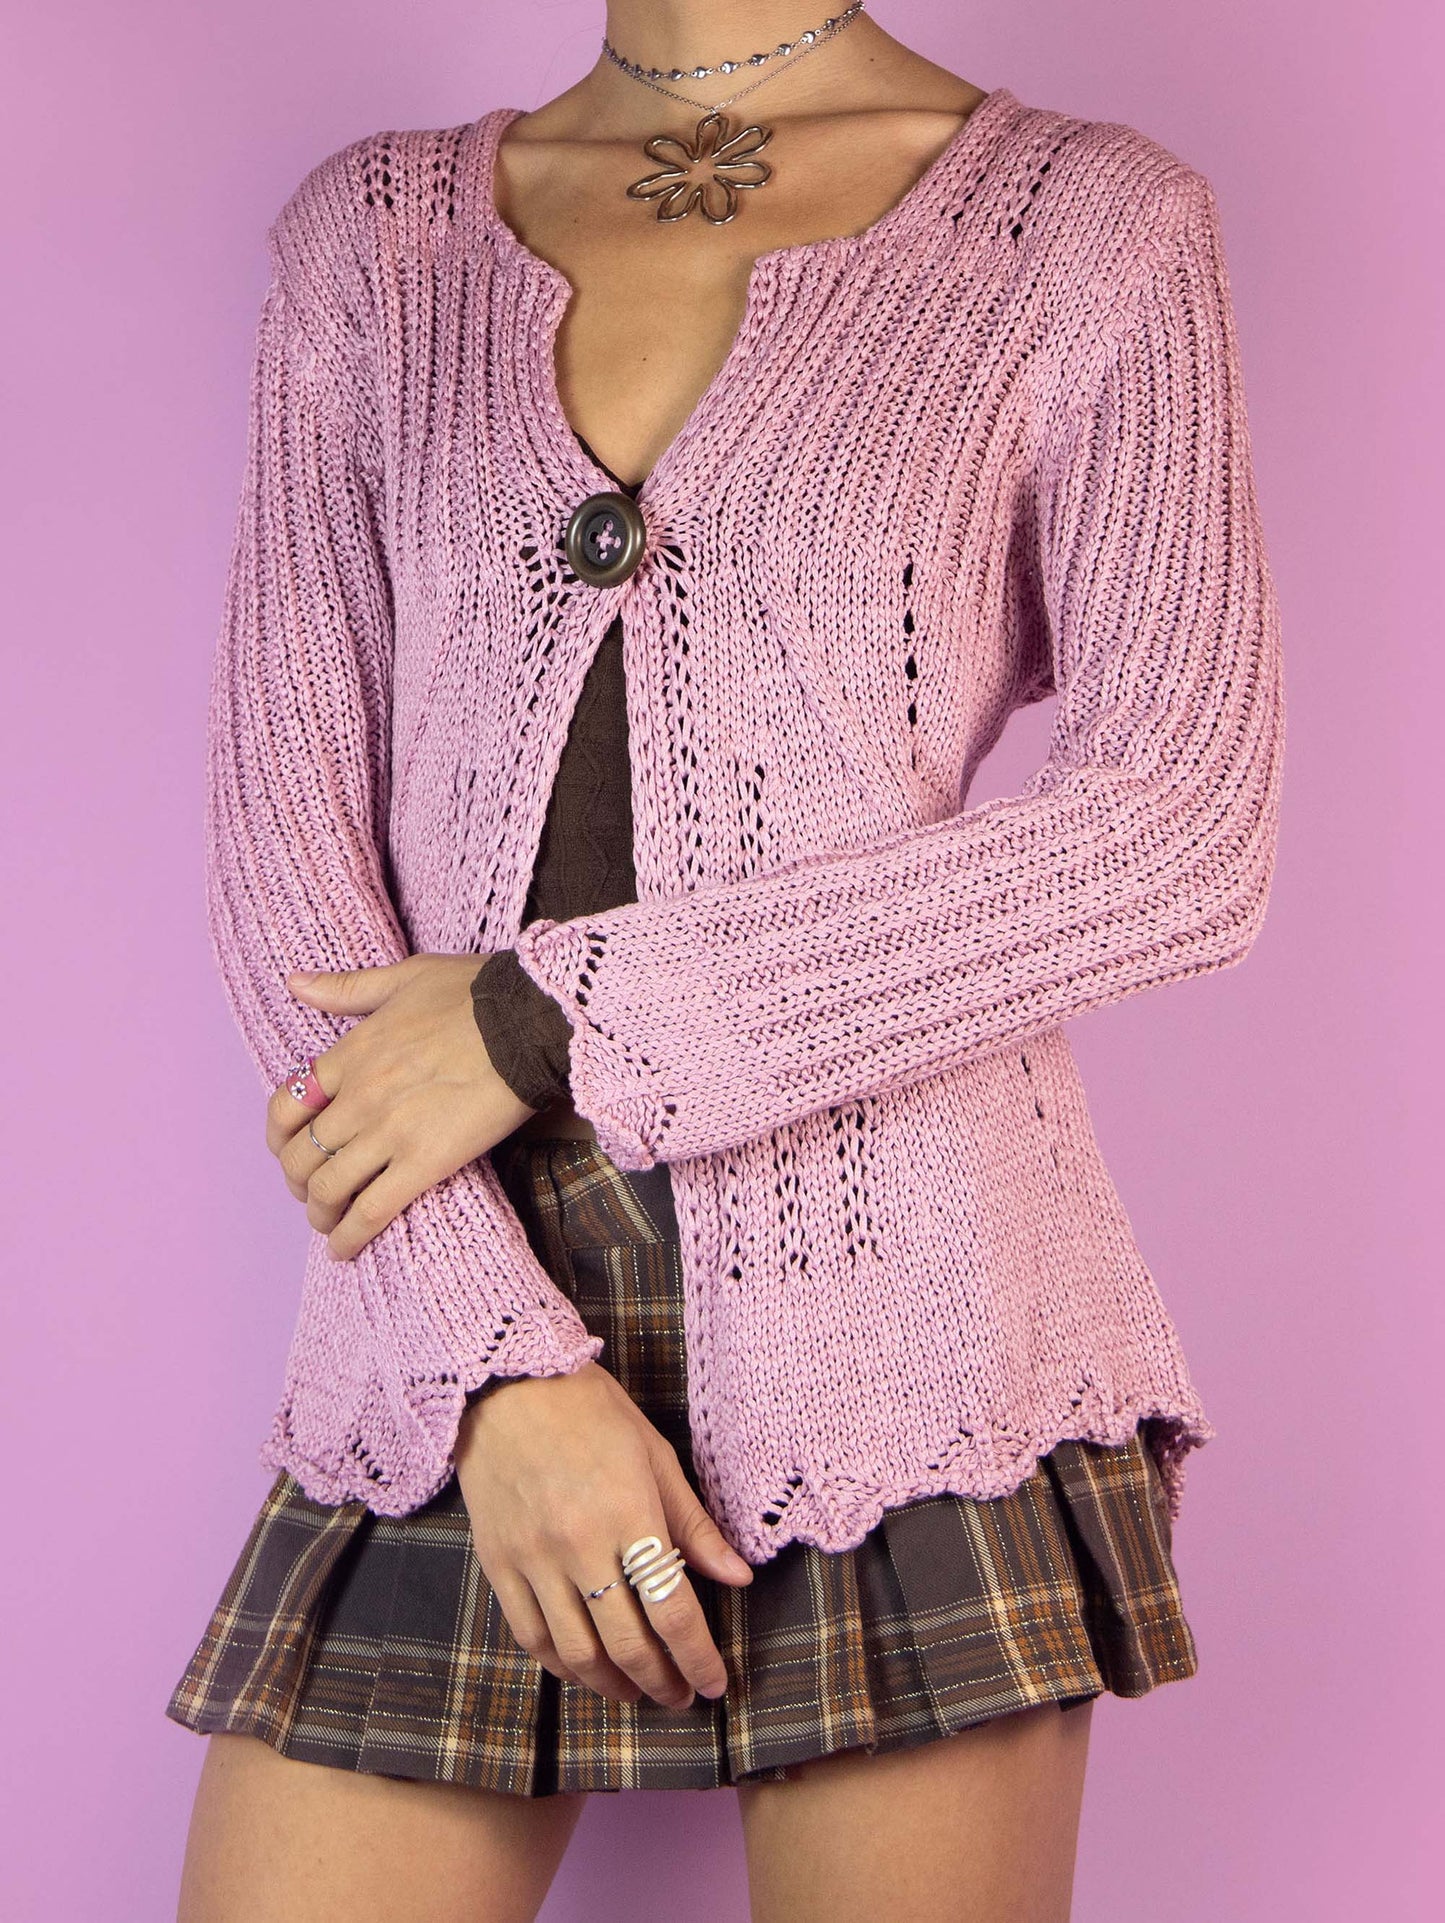 The Y2K Pink One Button Cardigan is a vintage pastel pink cardigan with a one-button closure. Boho fairy grunge 2000s crochet knit bolero jacket.